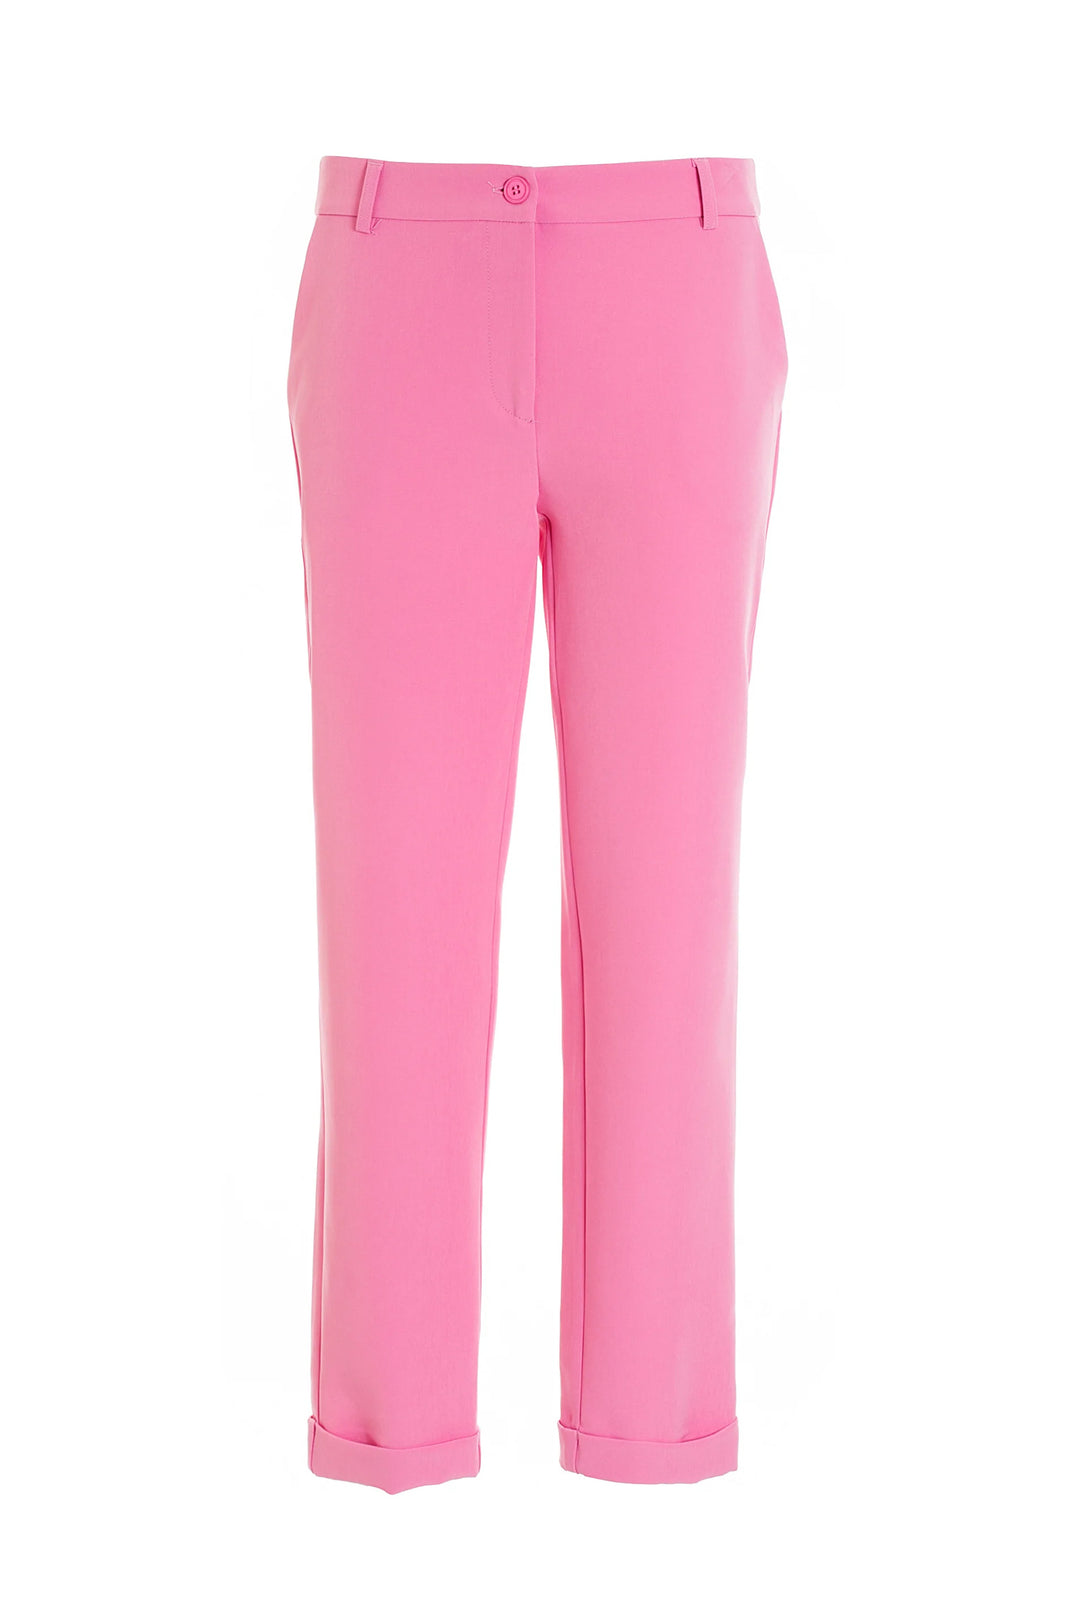 FRACOMINA Pantalone chino regular rosa in tessuto tecnico - Mancinelli 1954